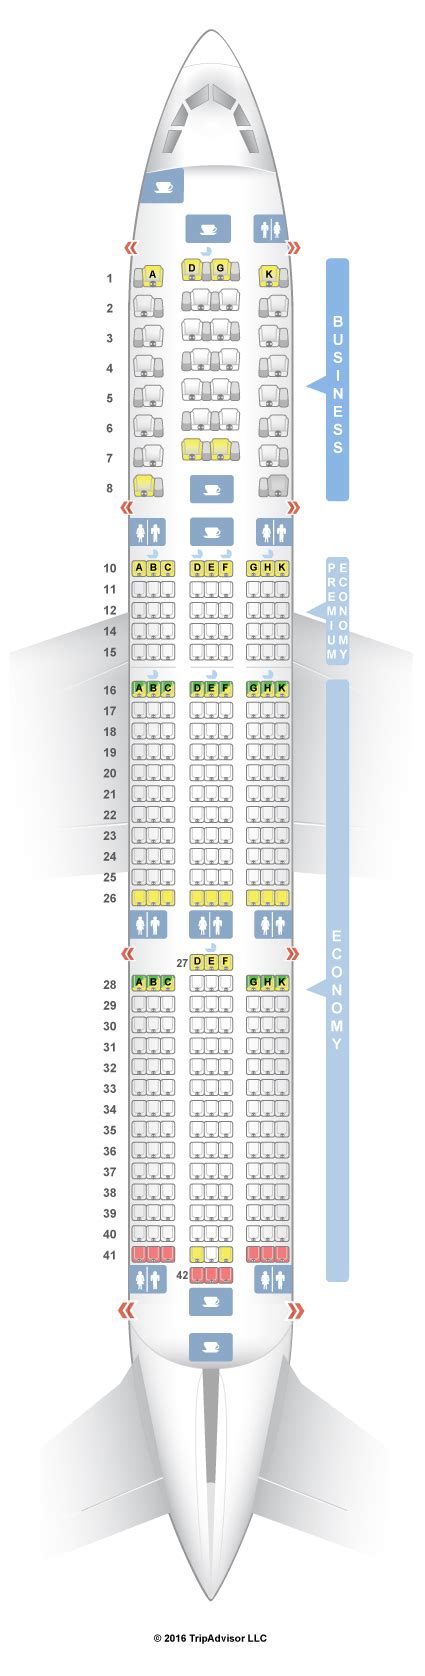 Seatguru Seat Map Vietnam Airlines Airbus A350 900 350 V1